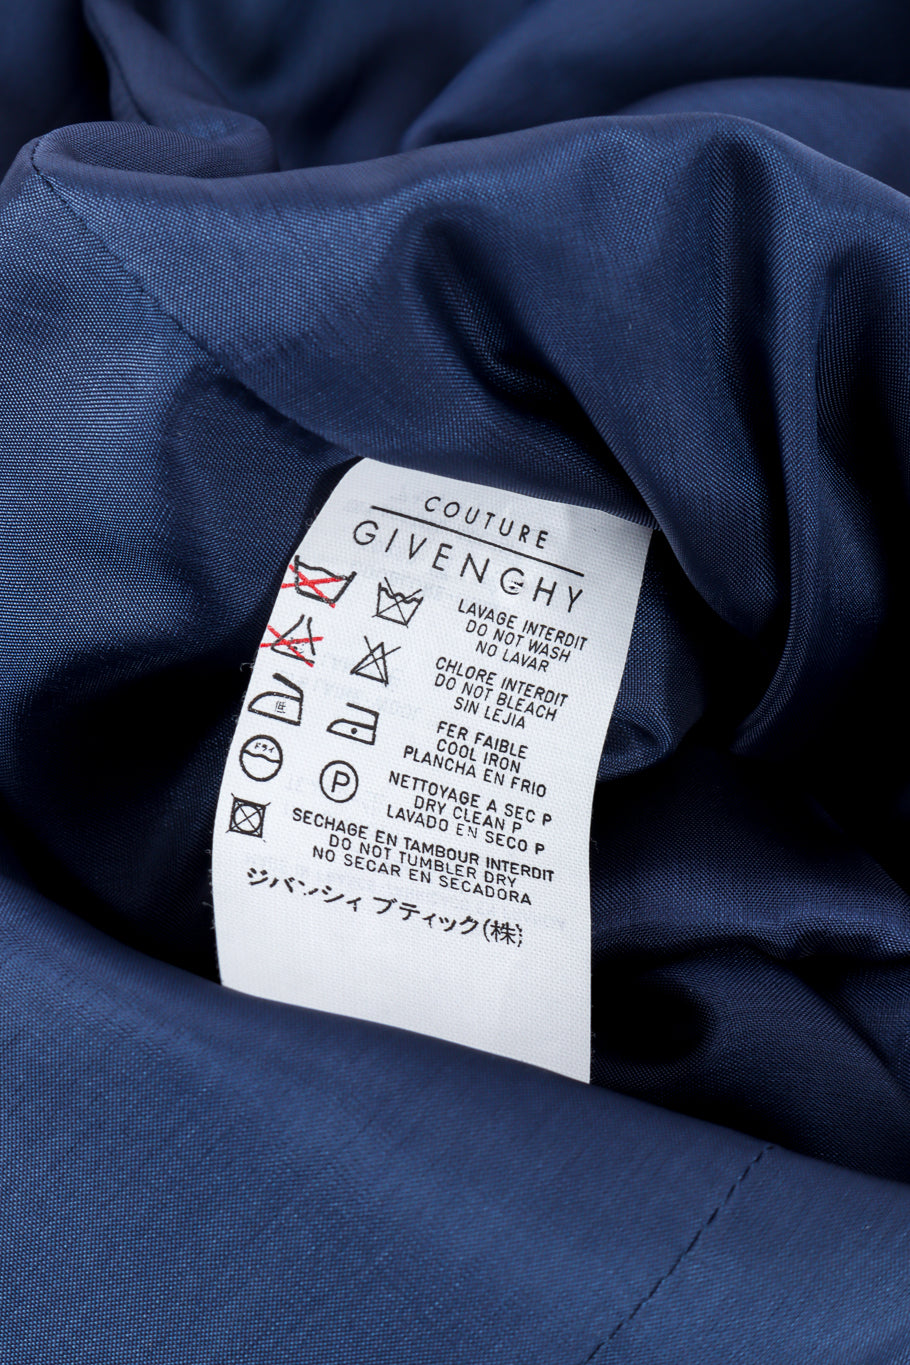 1998 F/W Wool Pinstripe Dress by Givenchy fabric tag @recessla